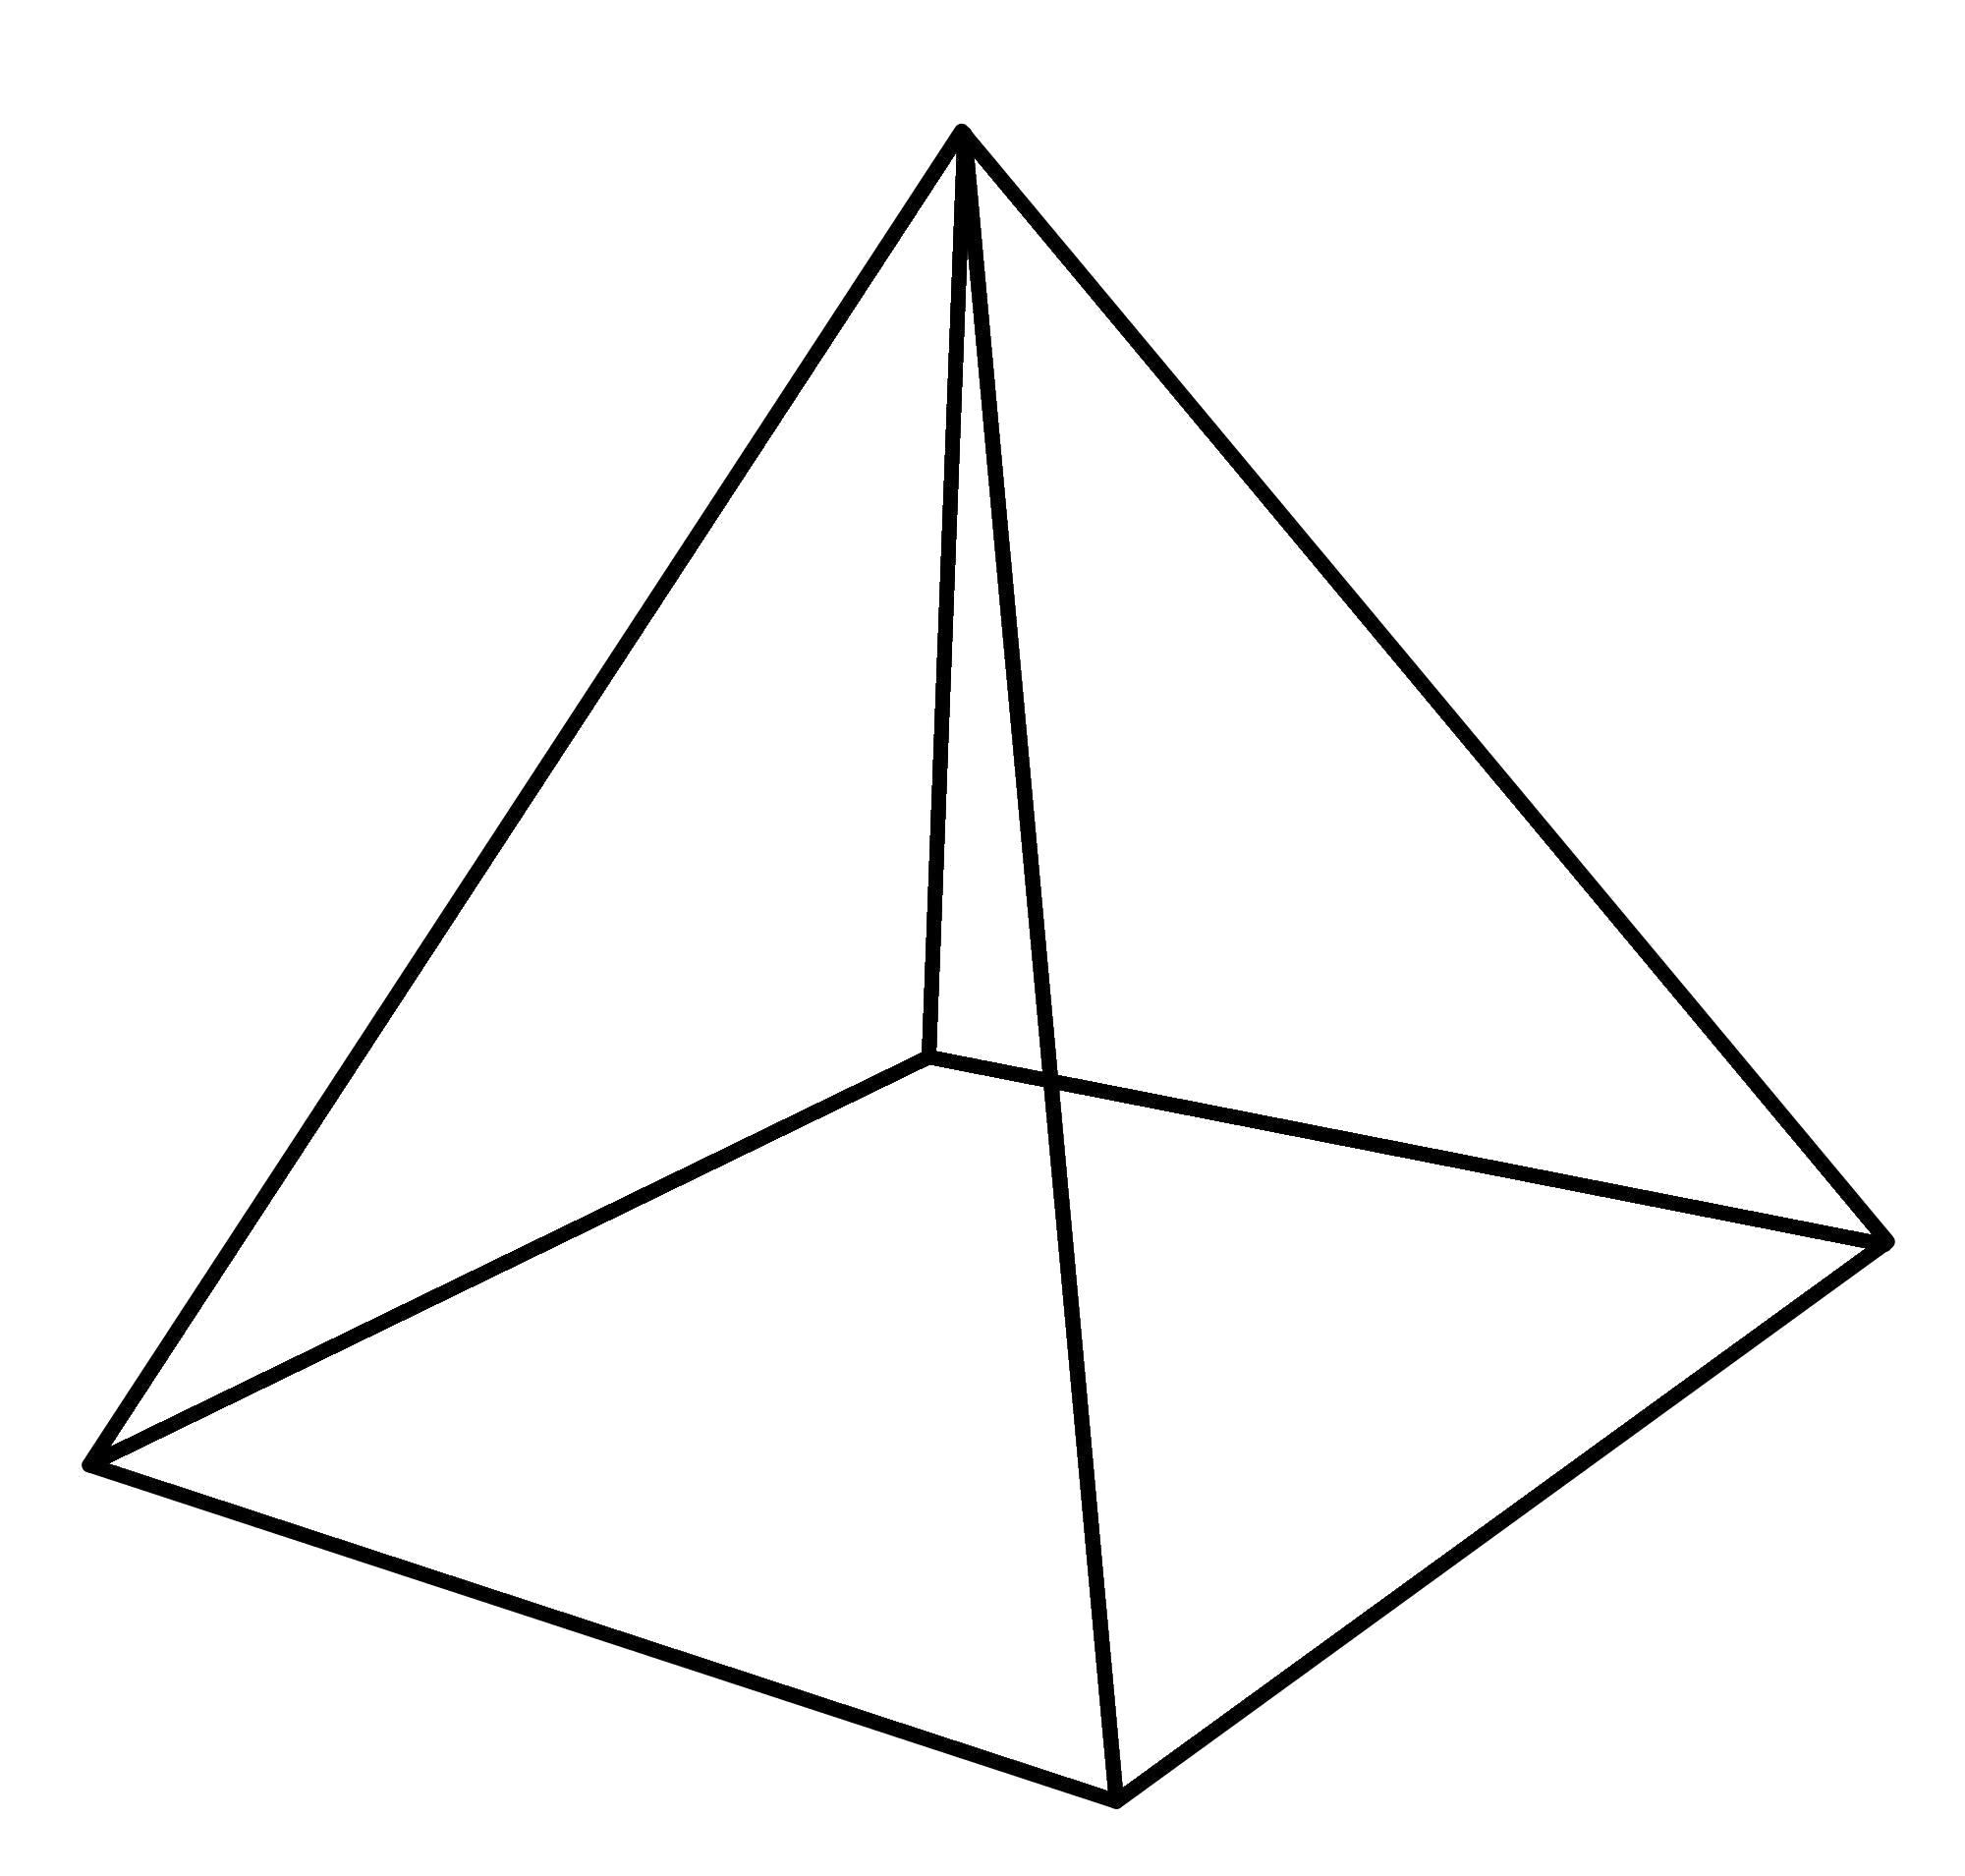 Название: Раскраска Раскраски геометрические фигуры из бумаги пирамида макет, пирамида шаблон из бумаги. Категория: геометрические фигуры. Теги: .